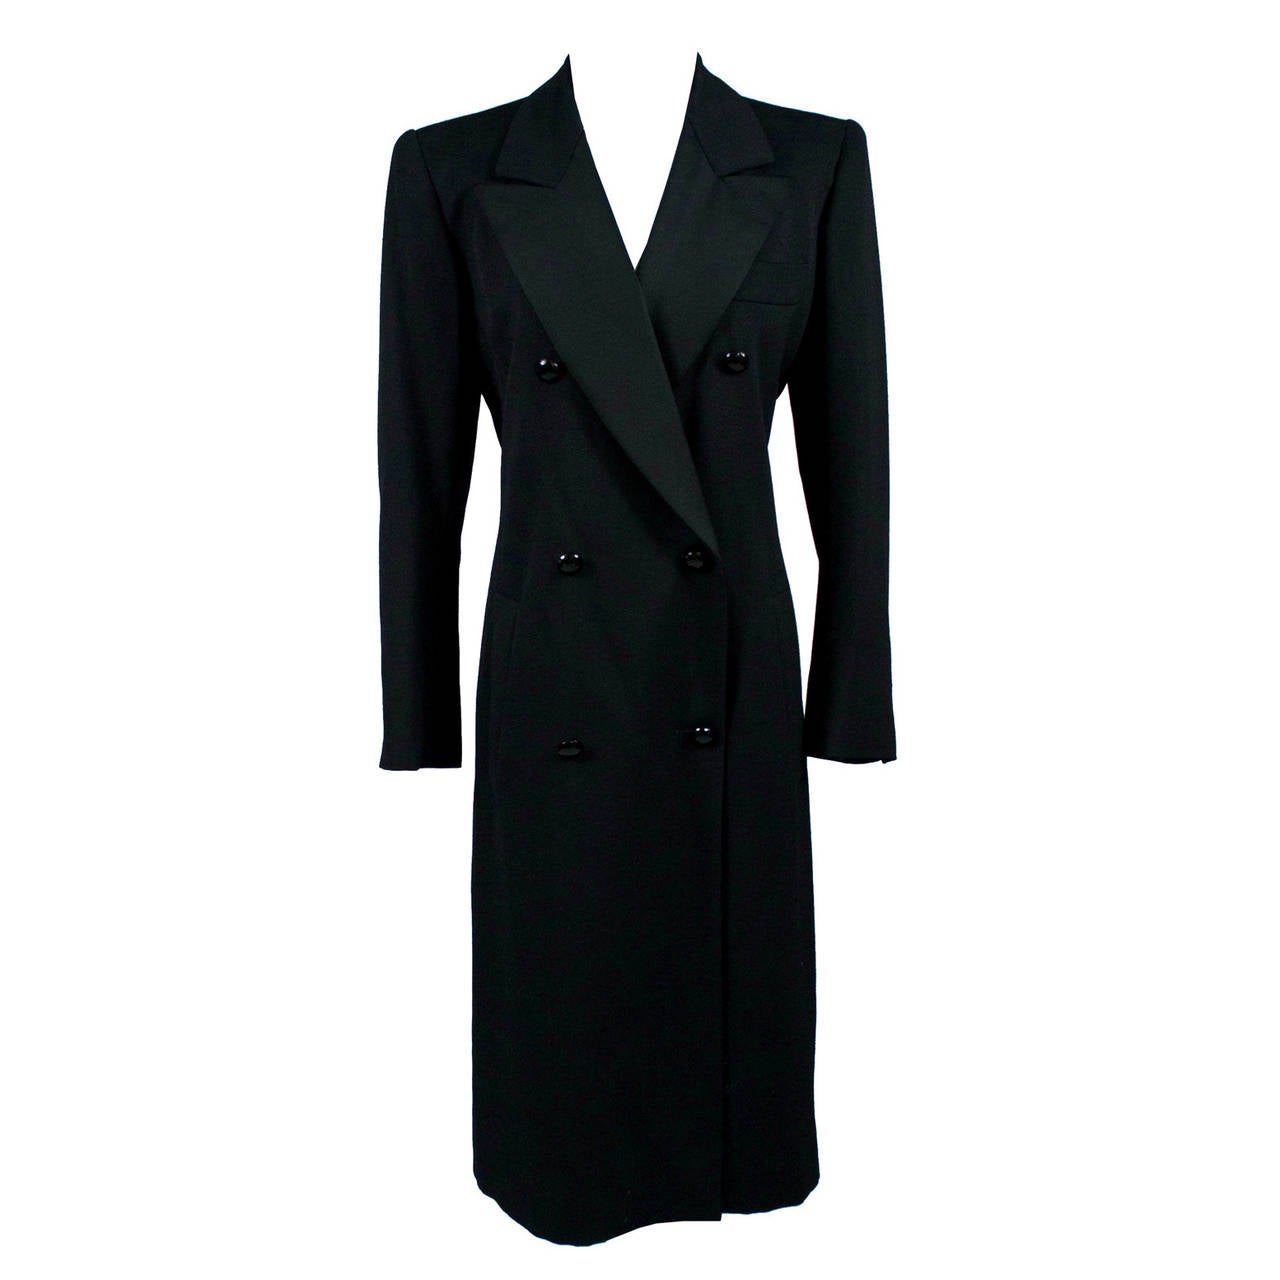 YSL 1970s Yves Saint Laurent Rive Gauche Black Vintage Coat Smoking Tuxedo Style